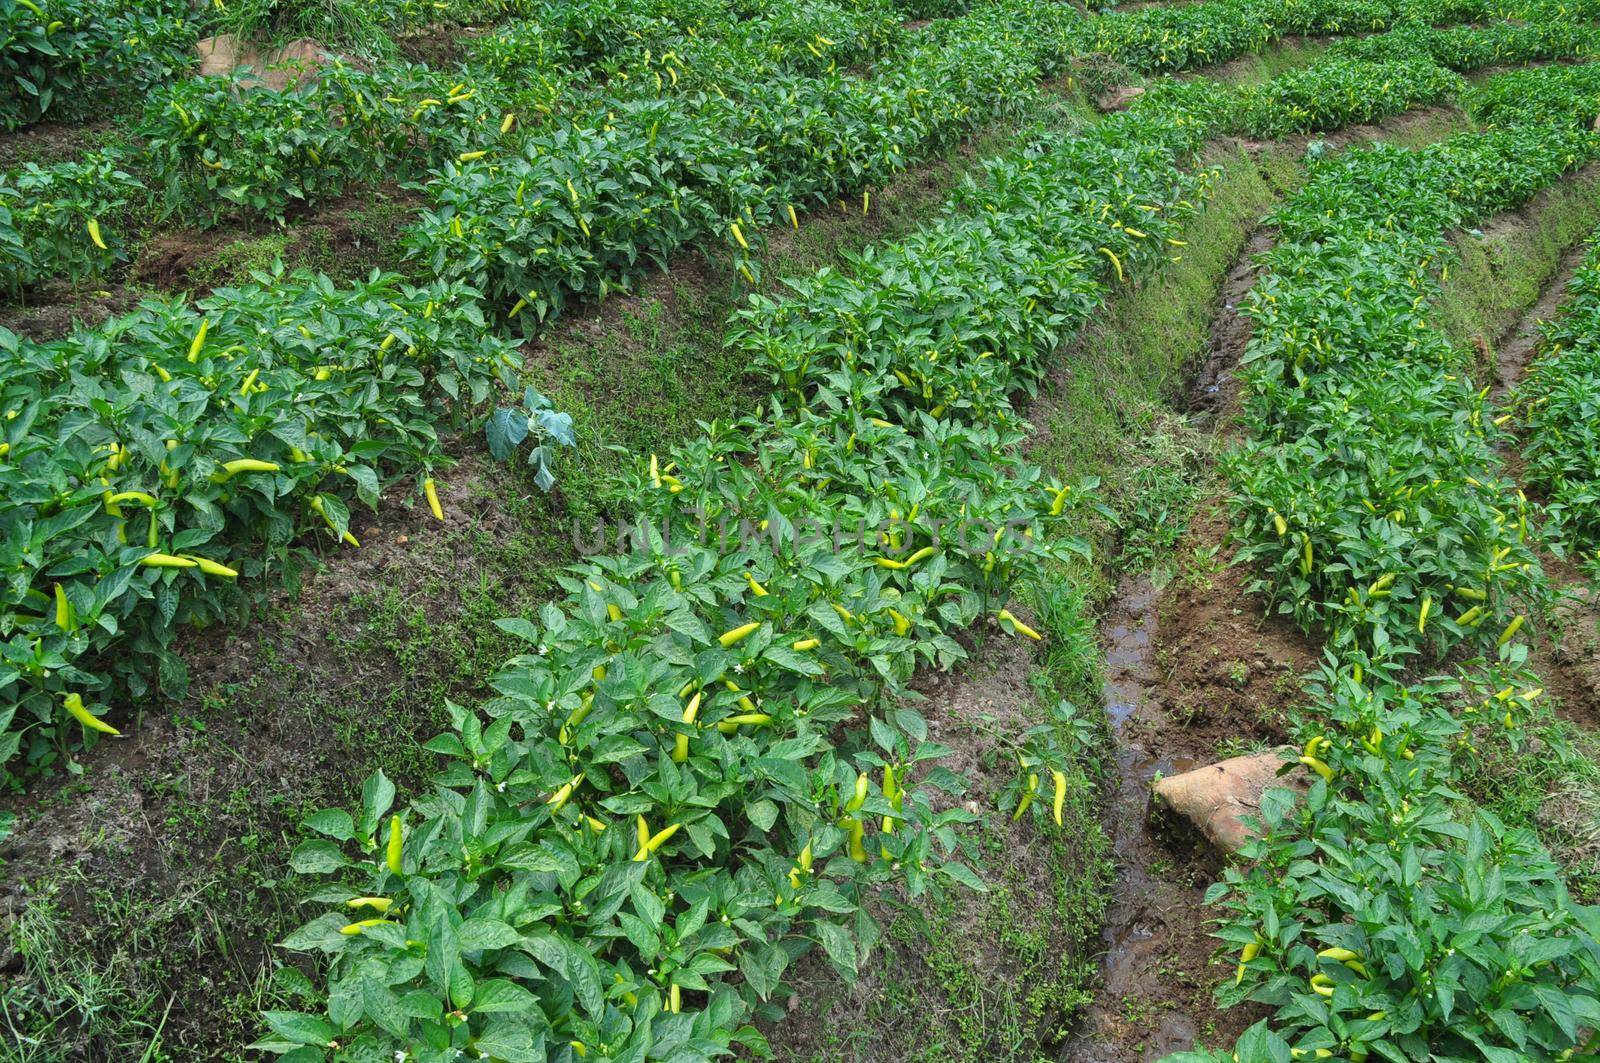 Green pepper plantation somewhere in Sri Lanka.